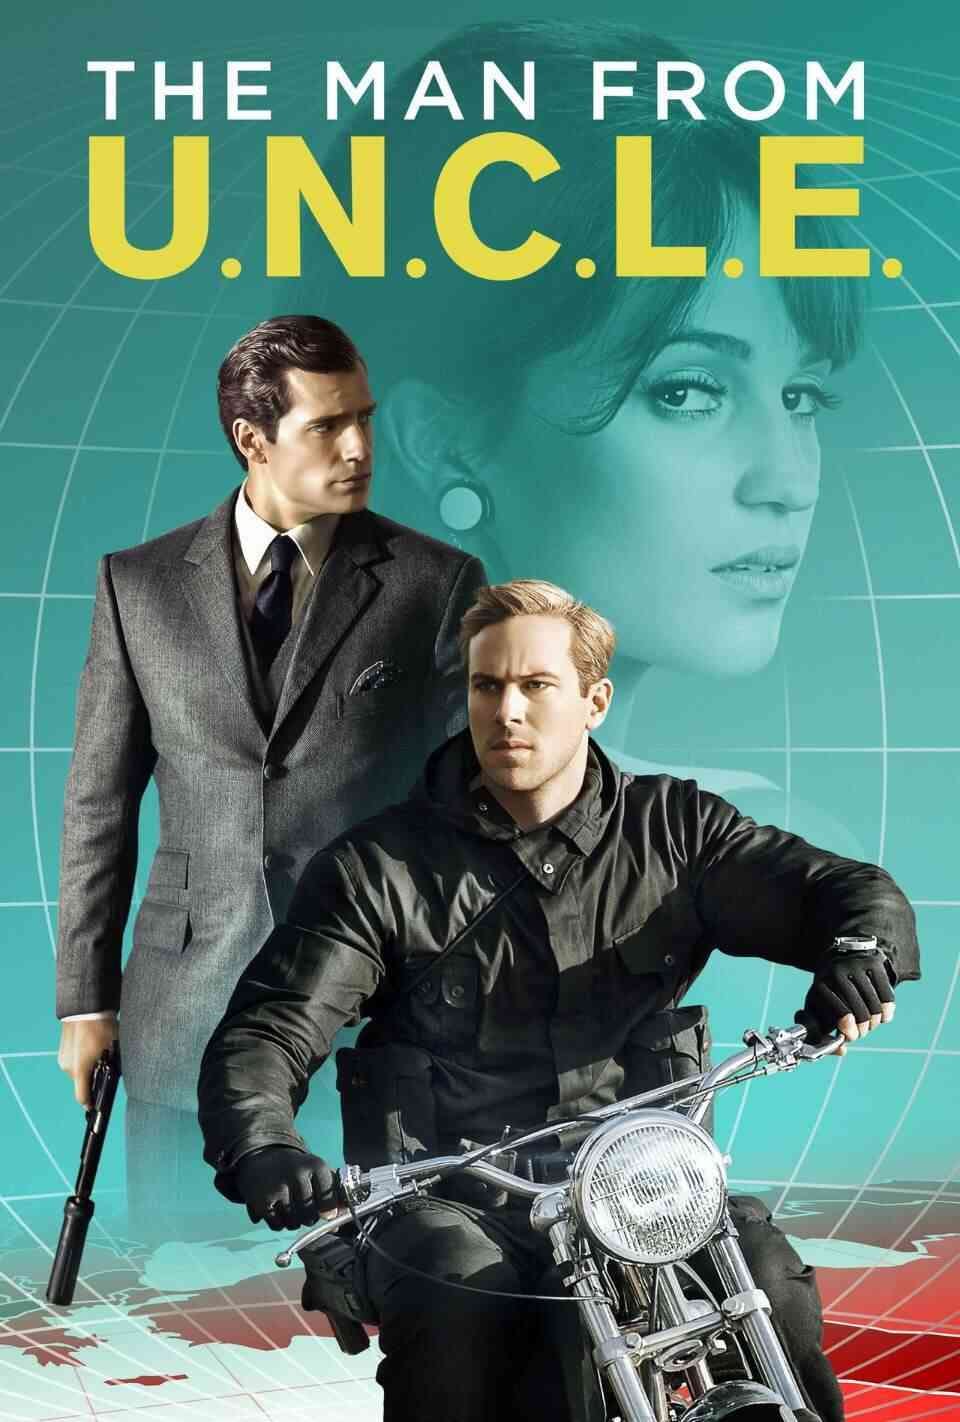 Read The Man from U.N.C.L.E. screenplay (poster)